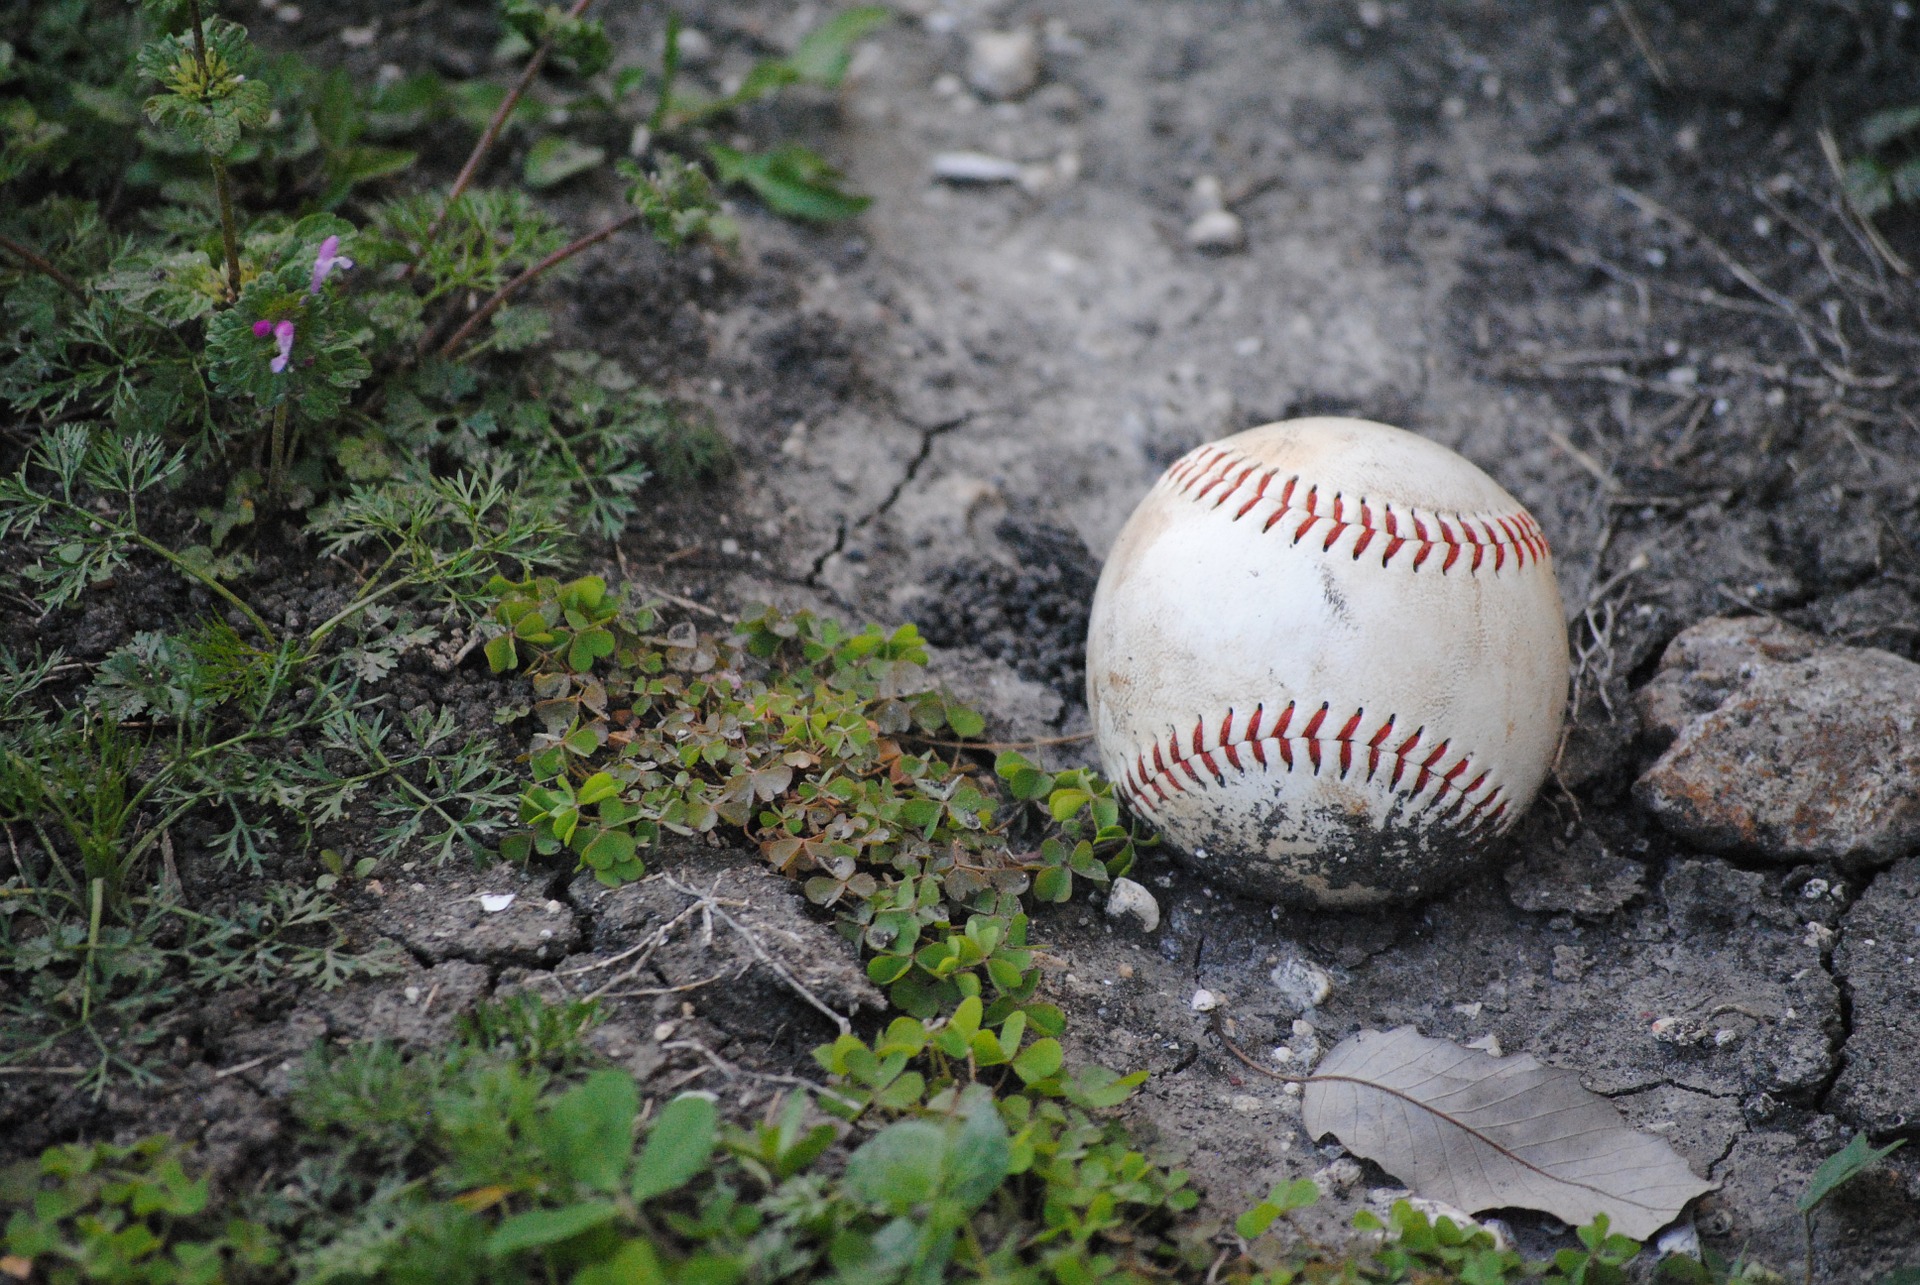 Baseball